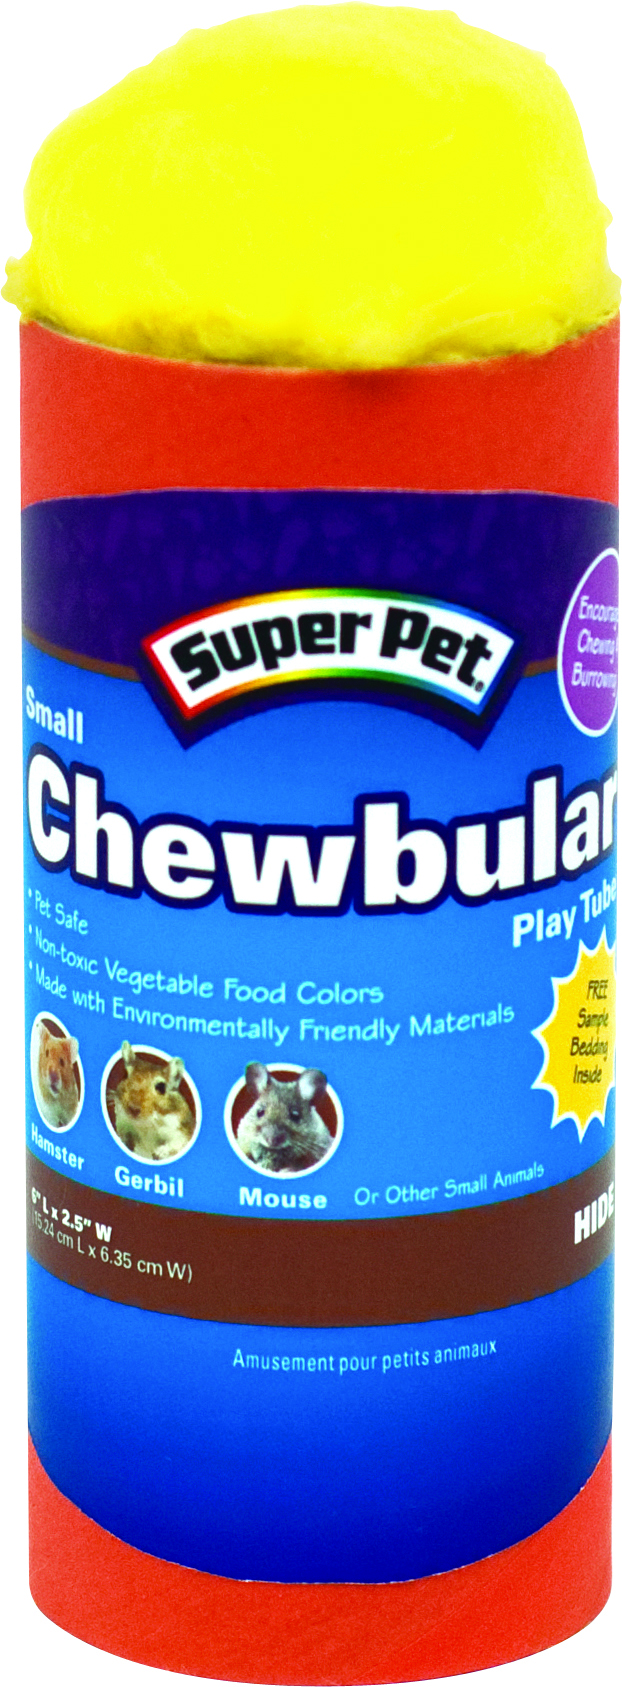 Chewbular Play Tube - Small